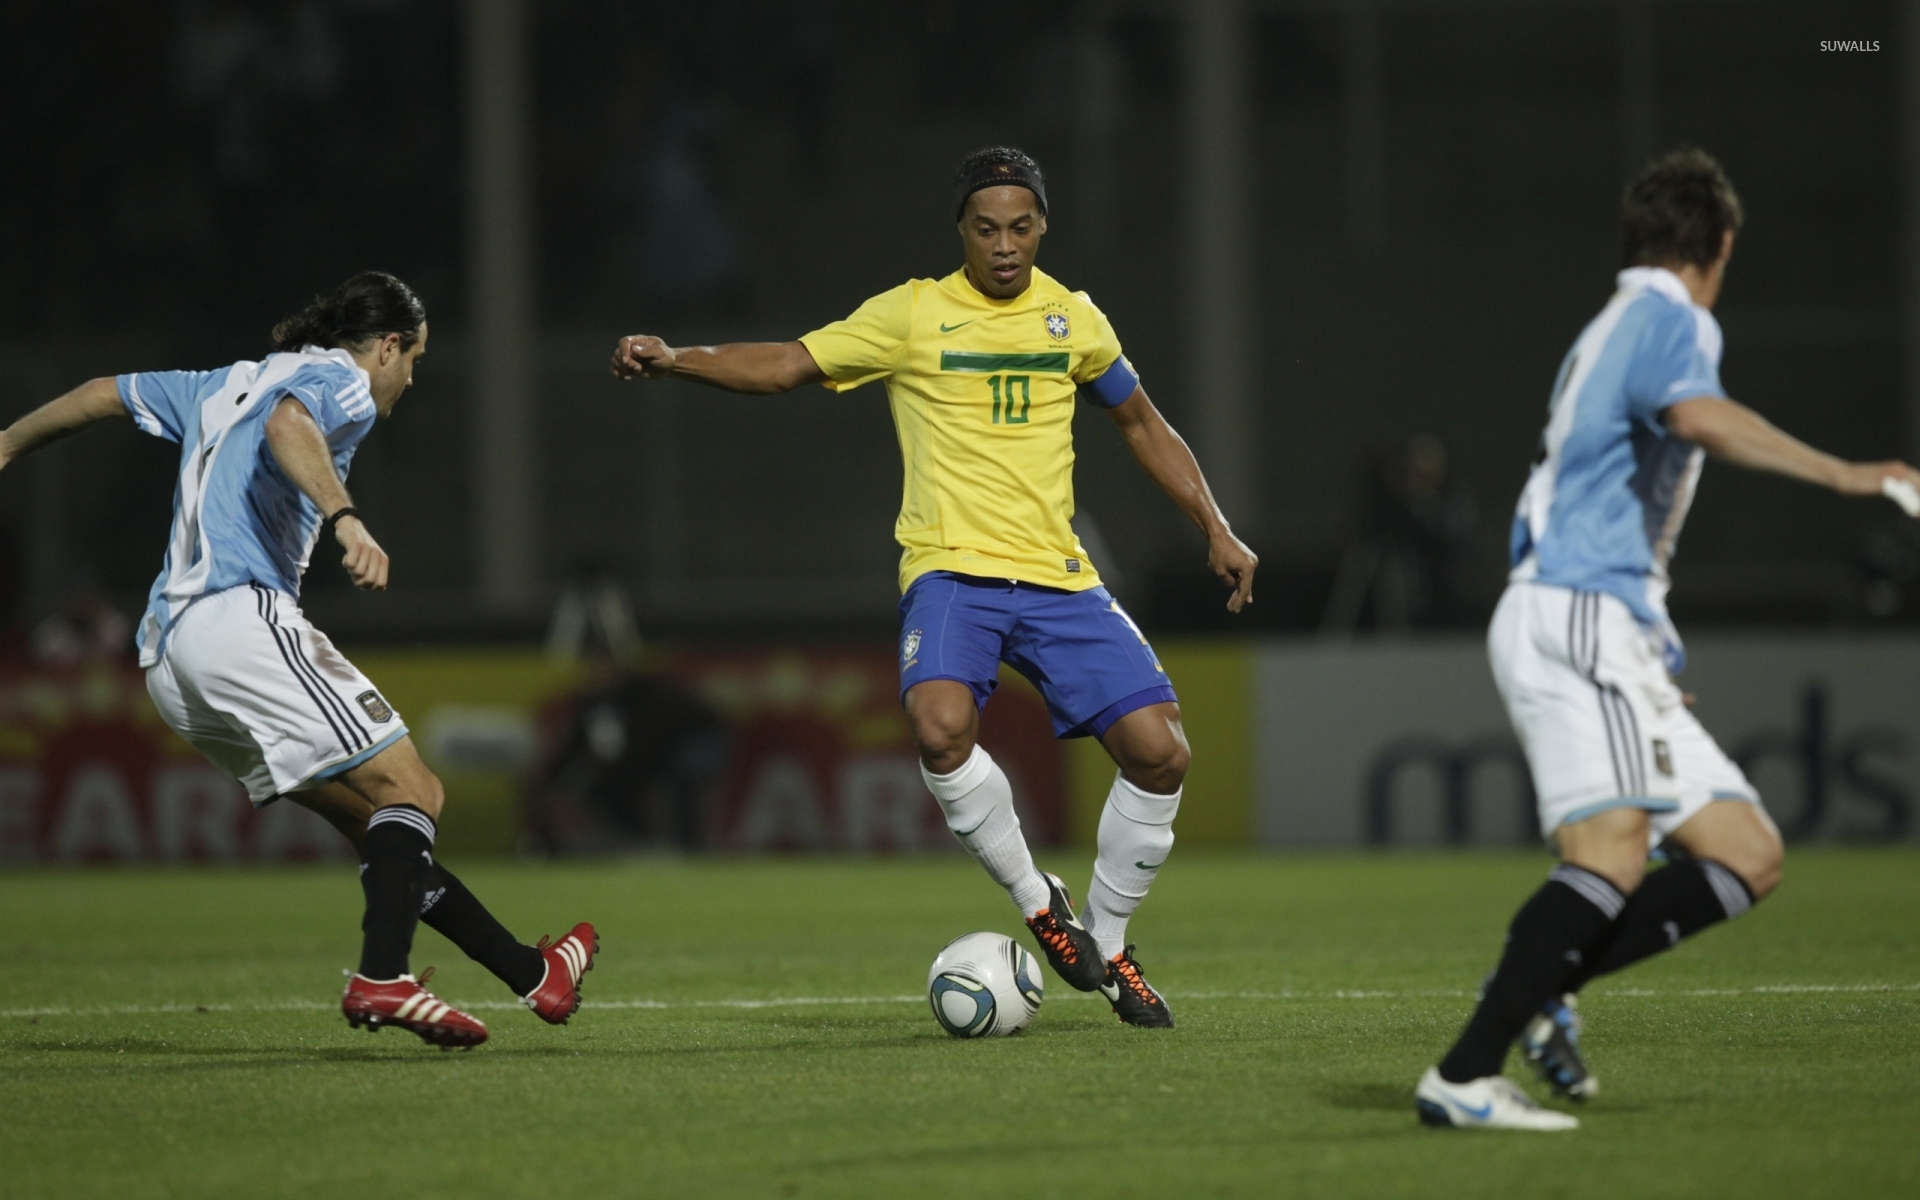 Ronaldinho Quotes On Football - HD Wallpaper 